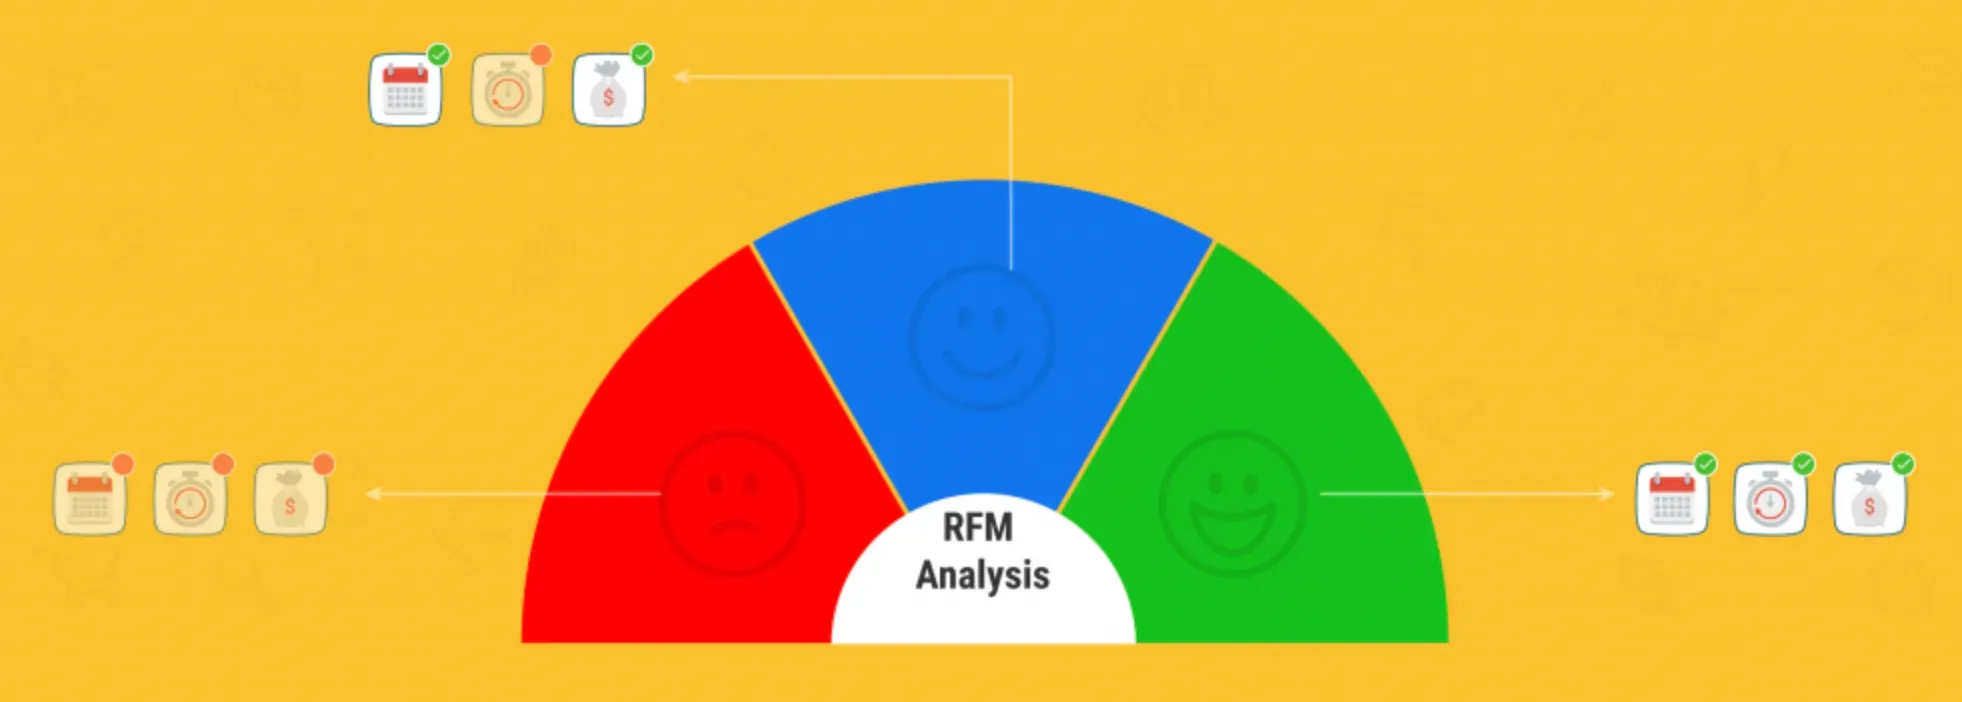 Benefits of RFM Analysis